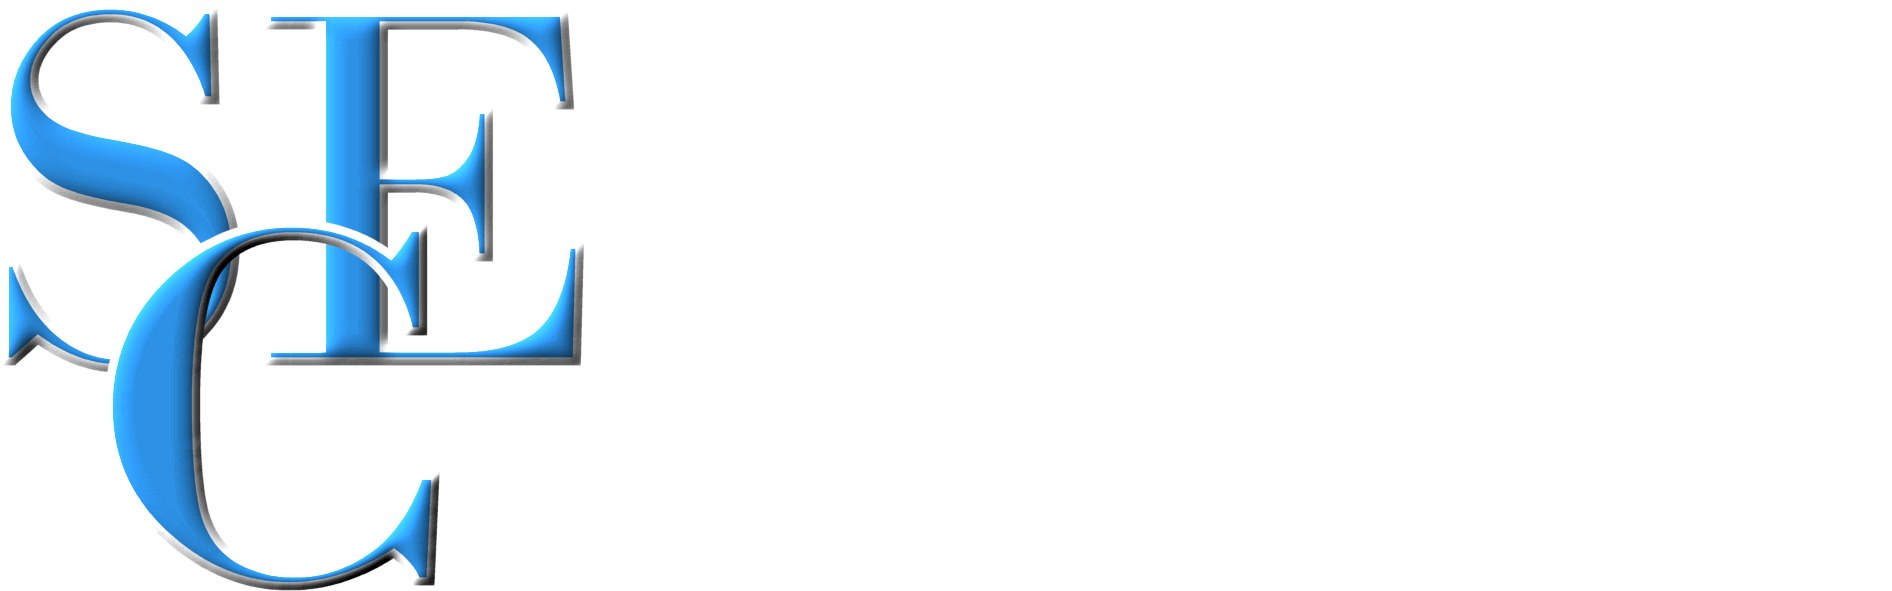 Schurman Entertainment Consulting